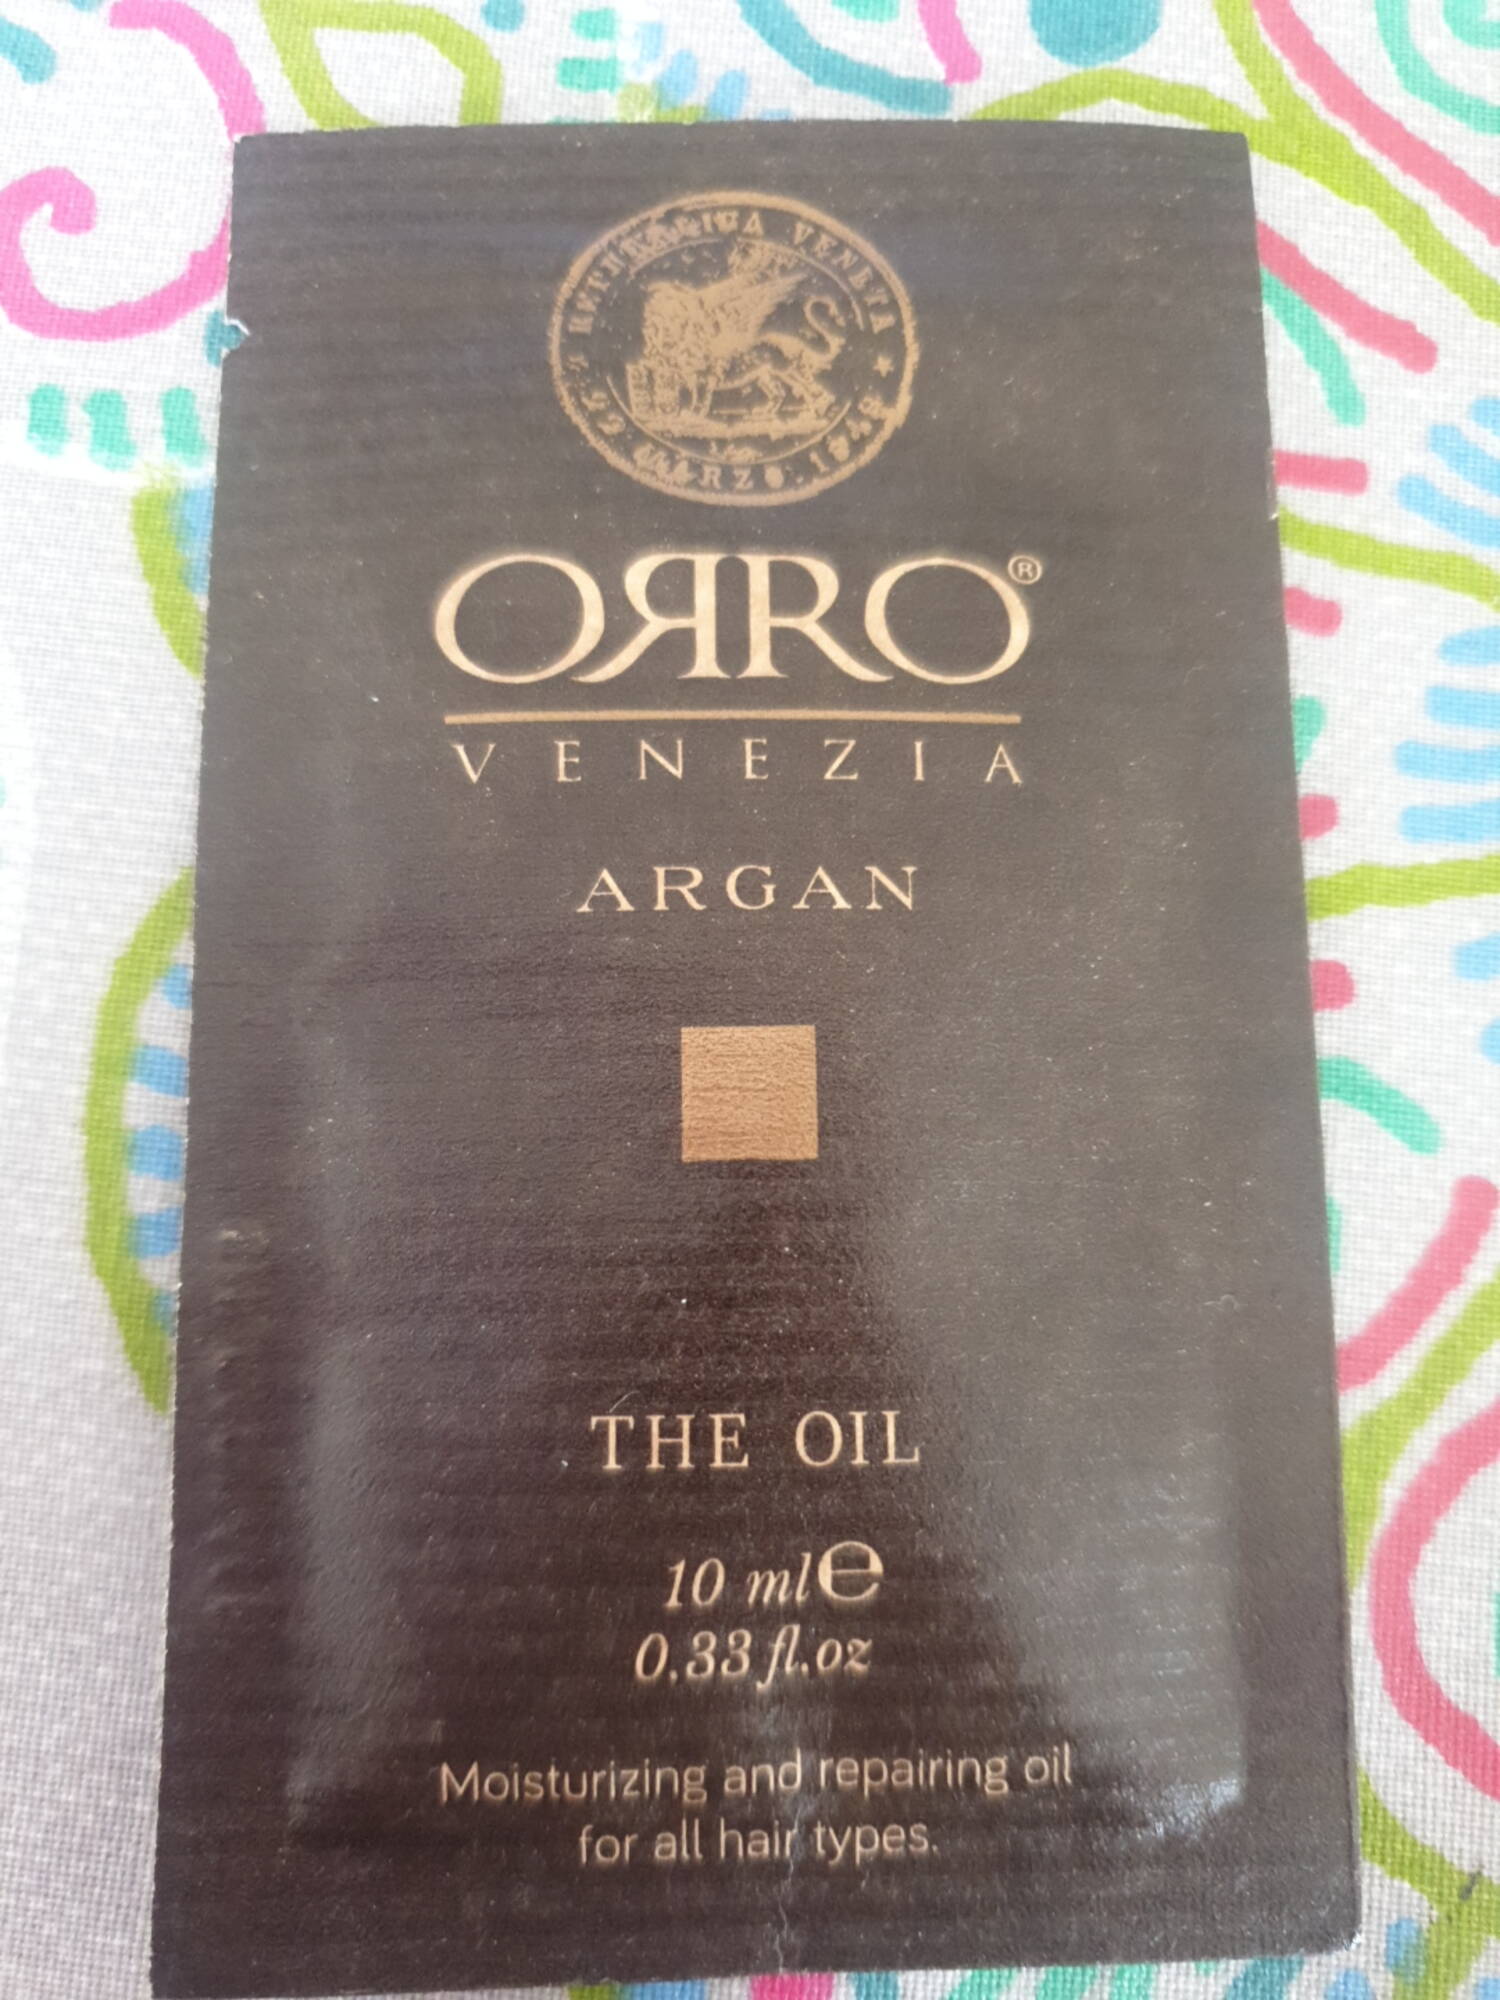 ORRO - The oil - Moisturizing and repairing oil